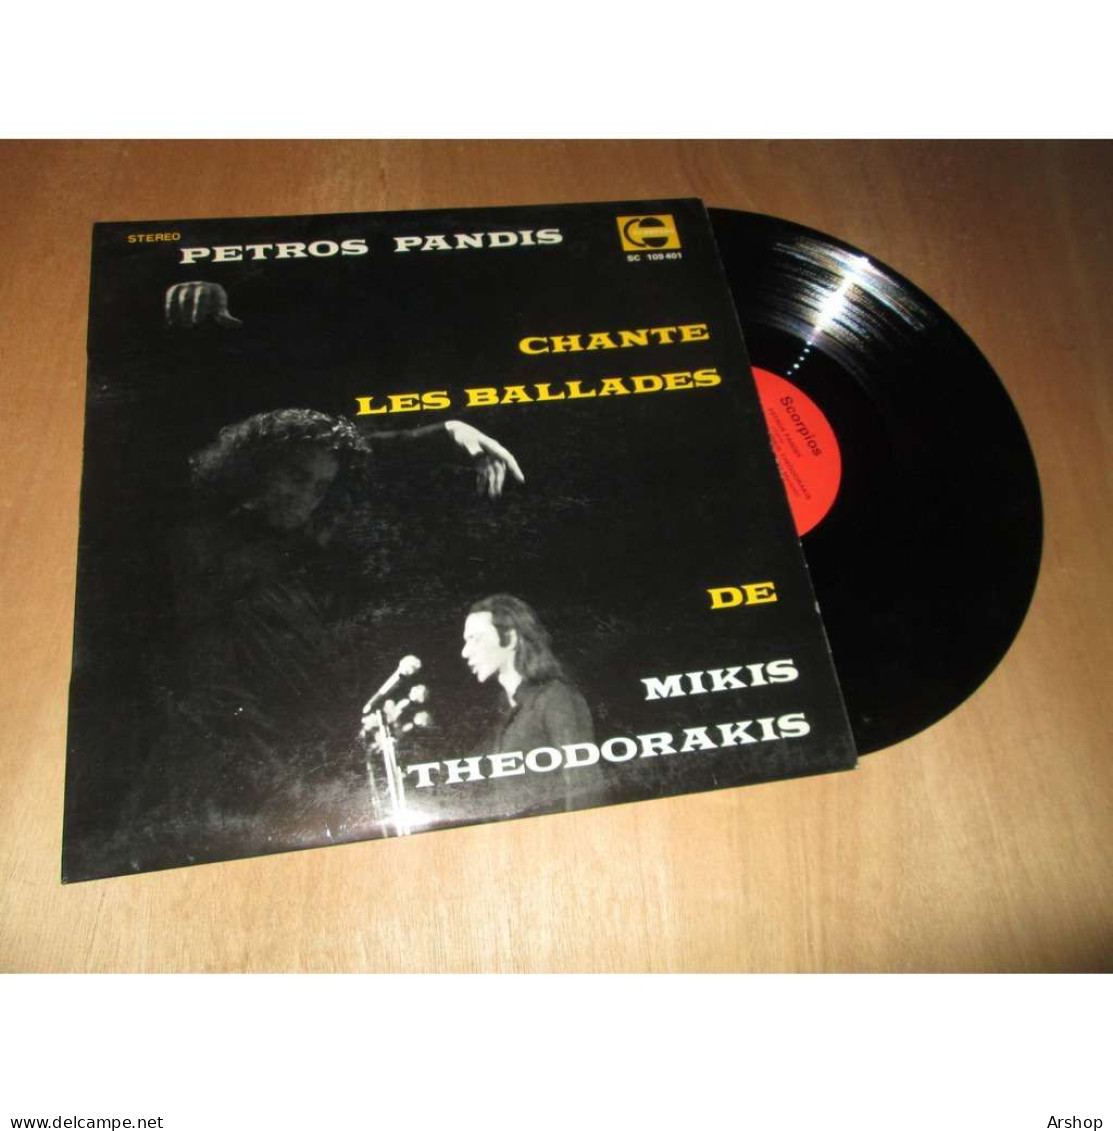 PETROS PANDIS Chante Les Ballades De MIKIS THEODORAKIS - Disque SCORPIOS SC 109 401 France - World Music